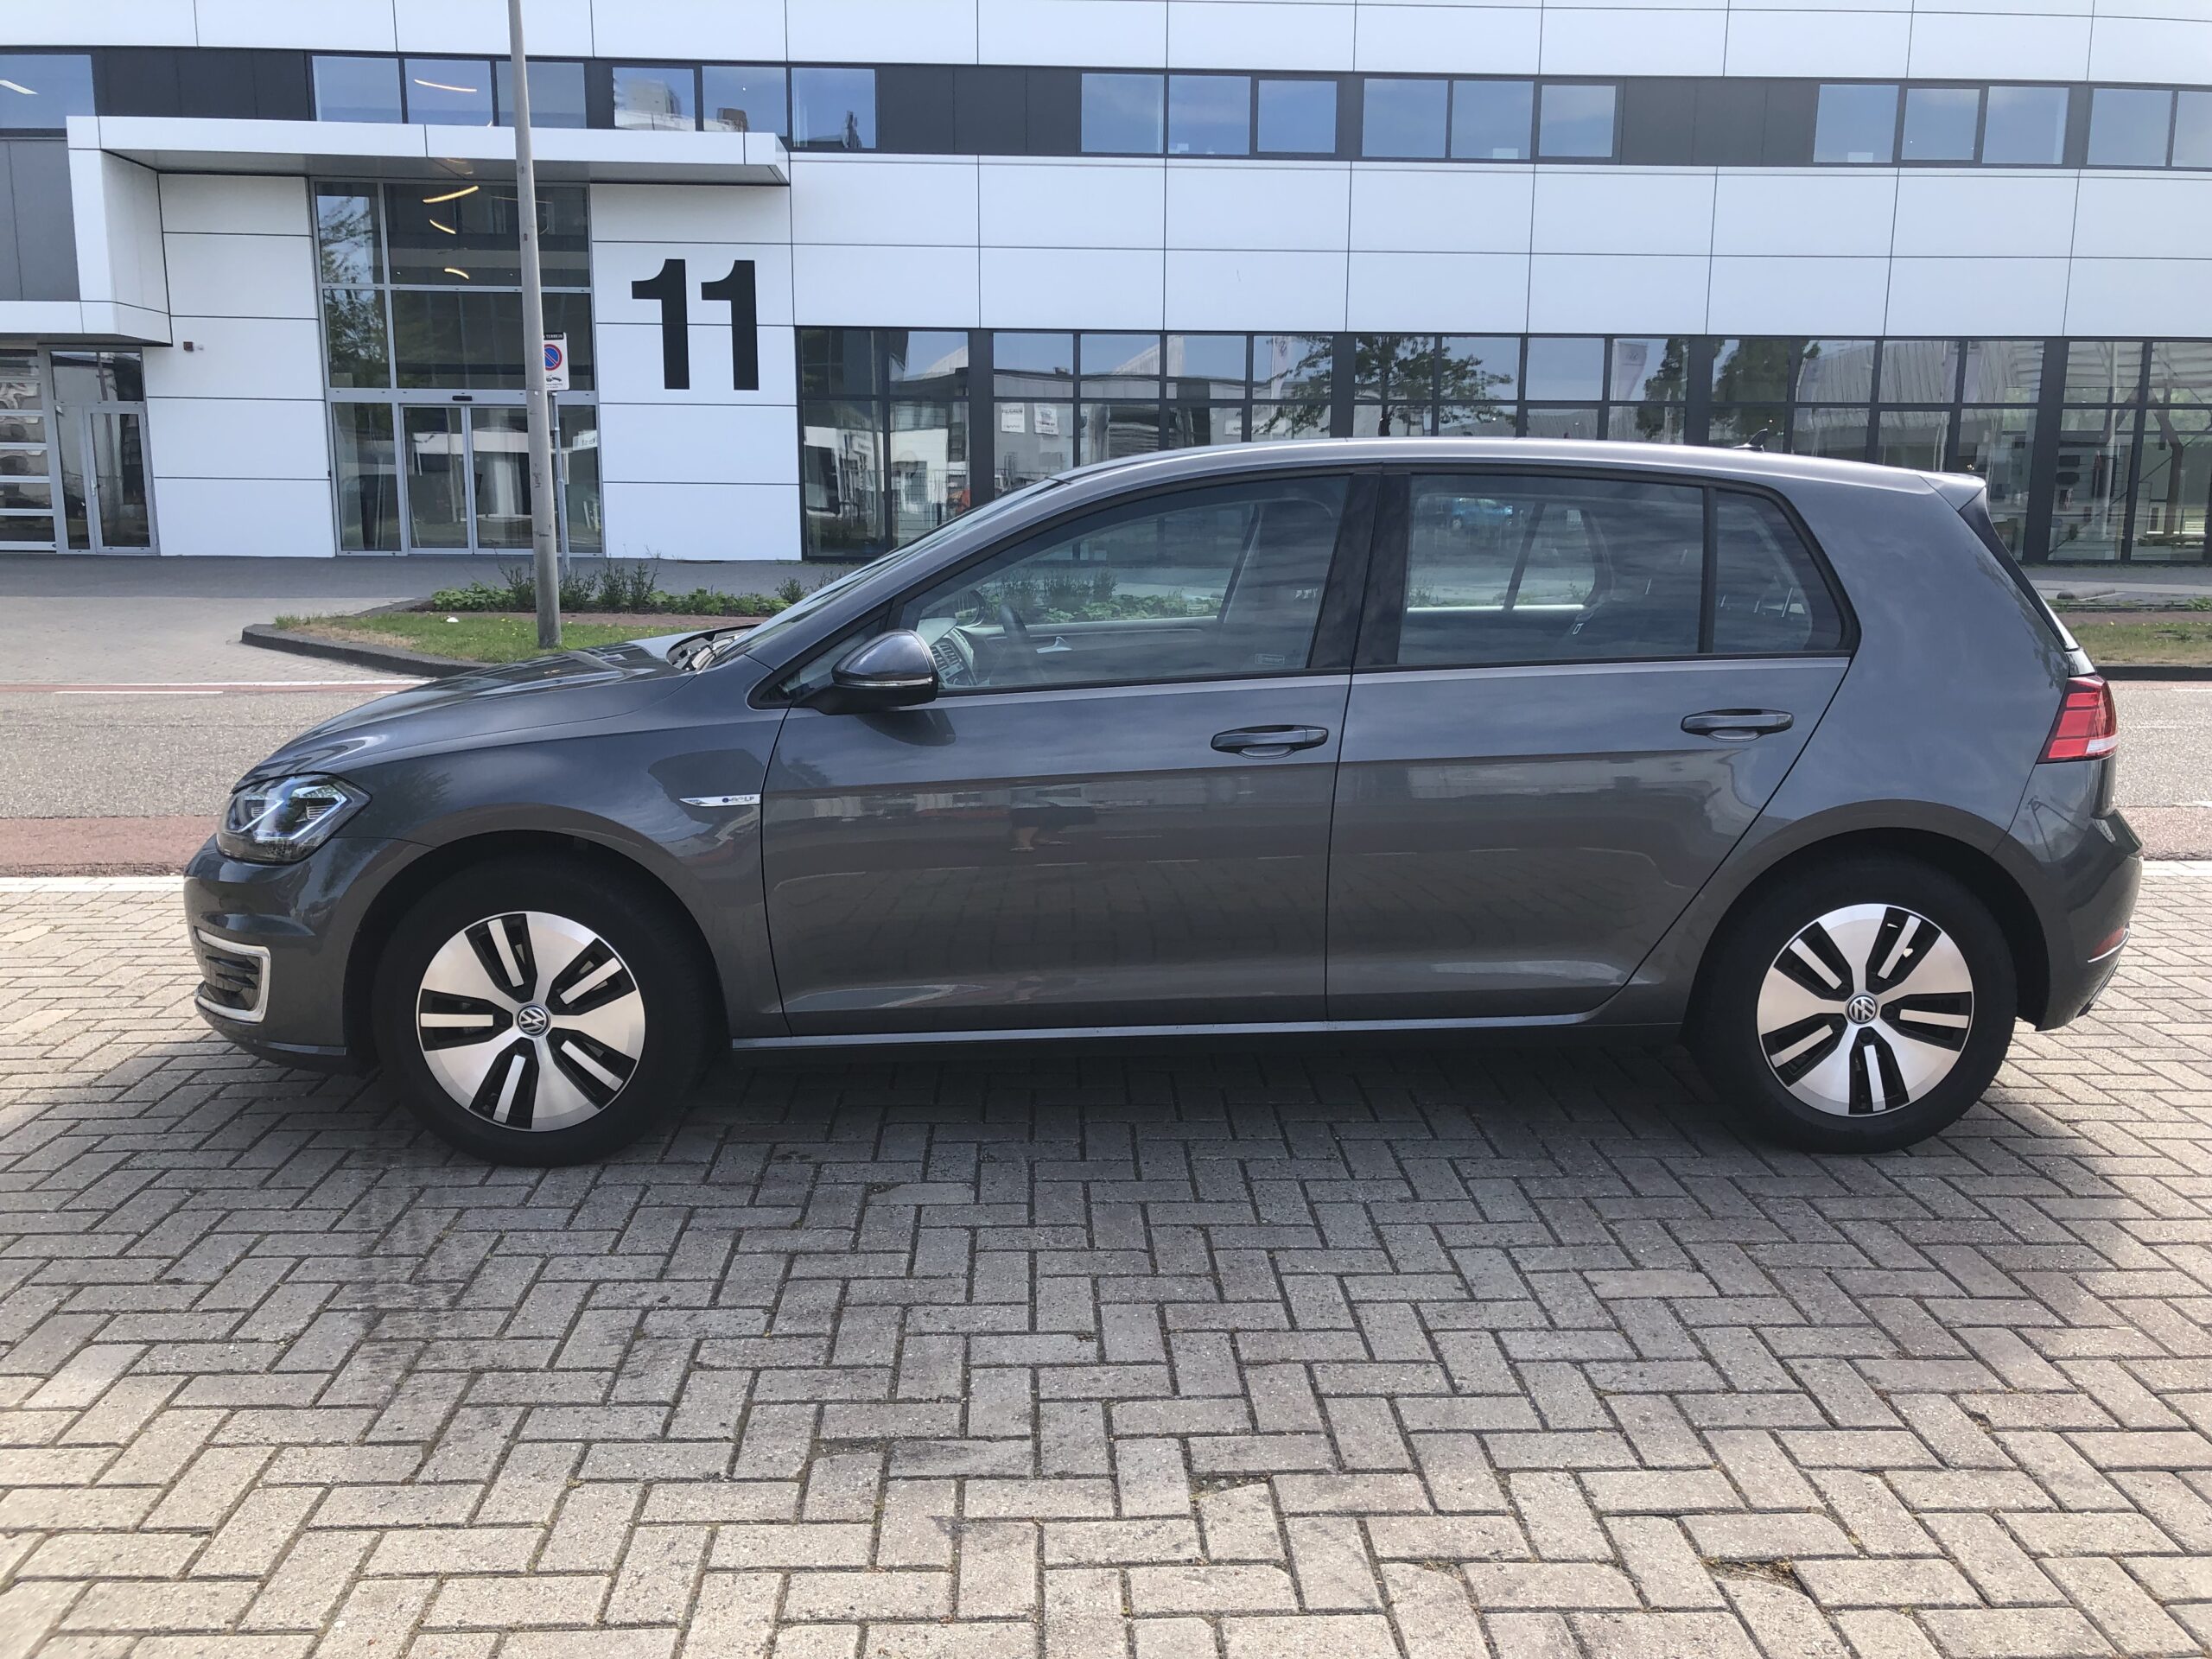 Volkswagen e-Golf E-DITION 5d. (4% bijtelling!)